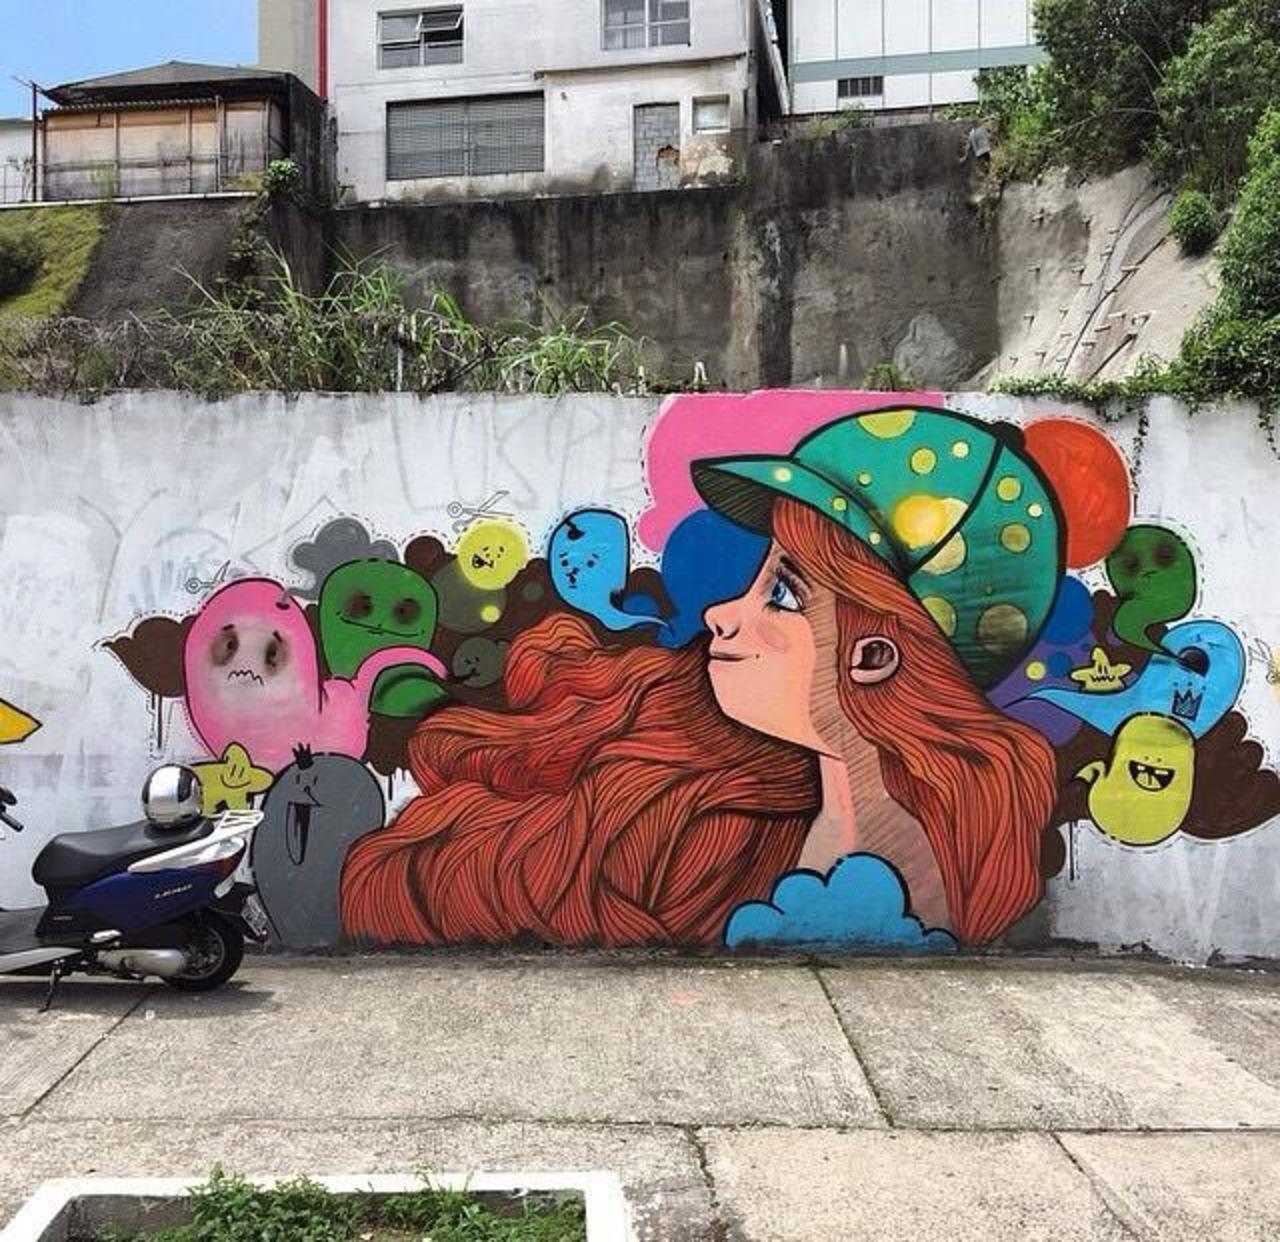 Endearing Street Art by Vupulos in São Paulo, Brazil 

#art #mural #graffiti #streetart http://t.co/MId4sEnkYJ